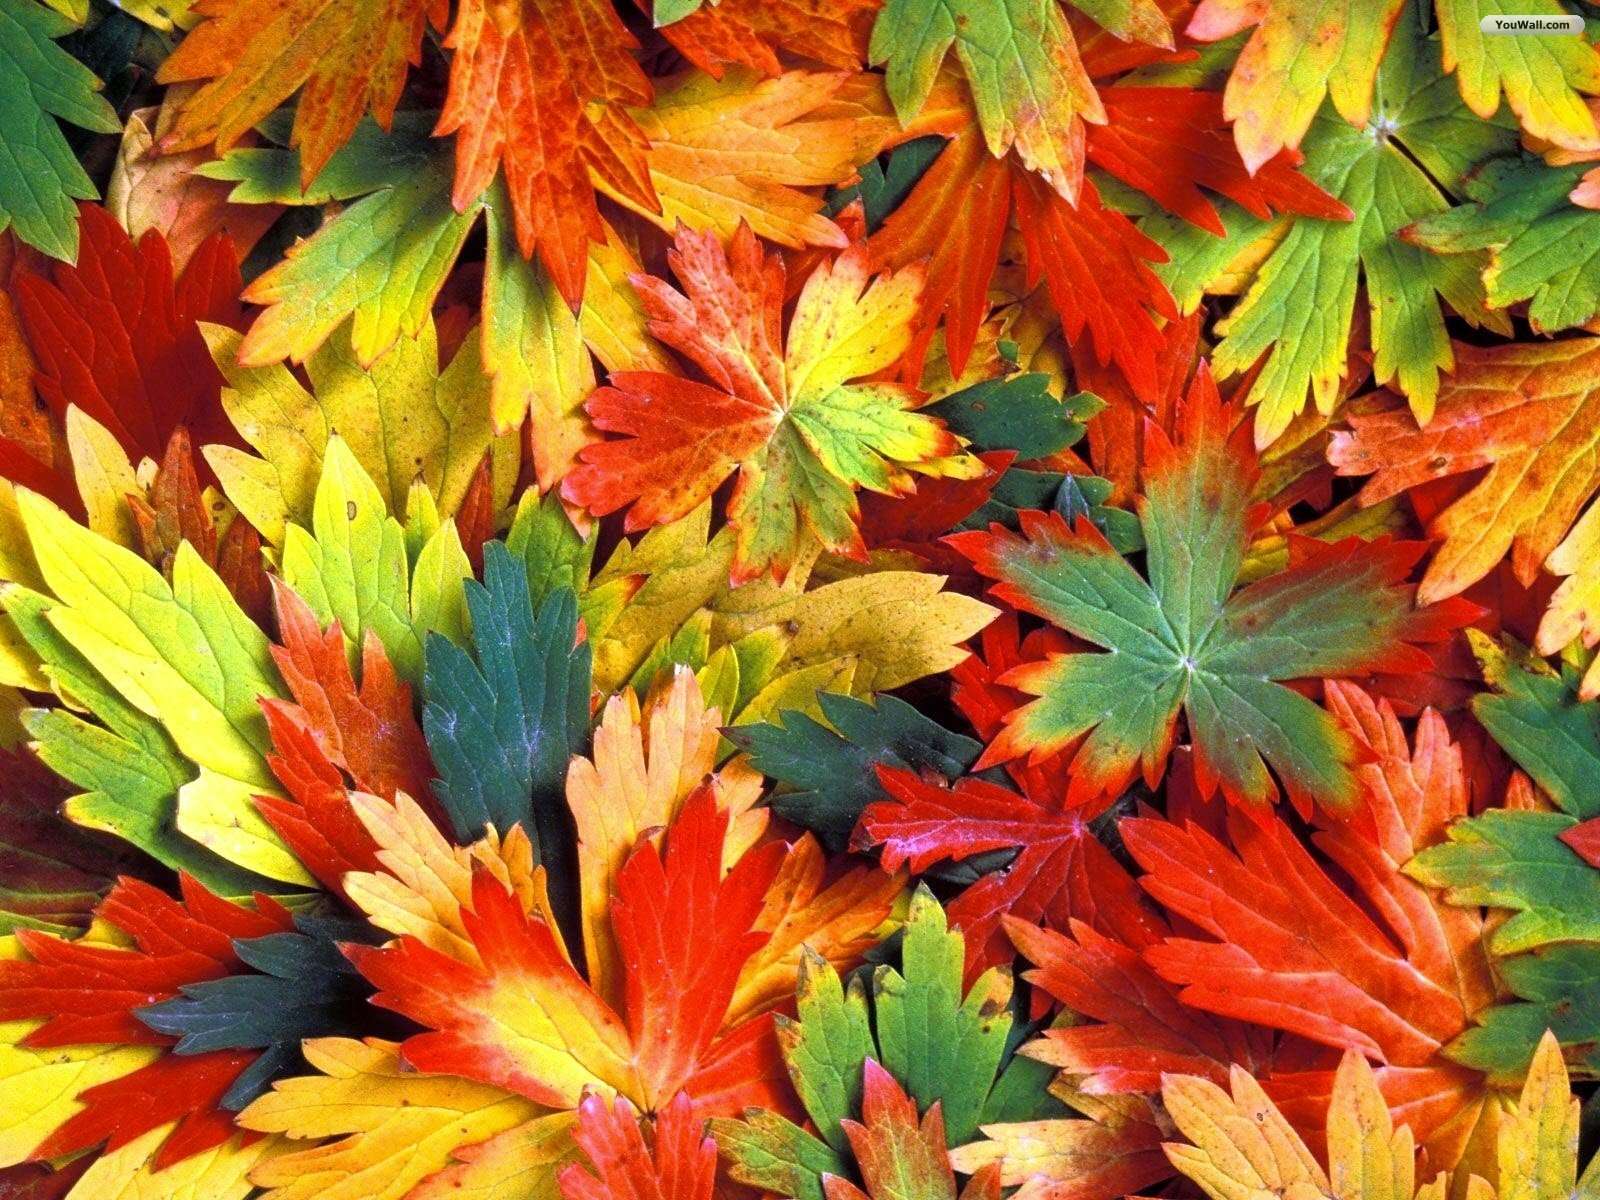 Peaked Leaves online puzzle